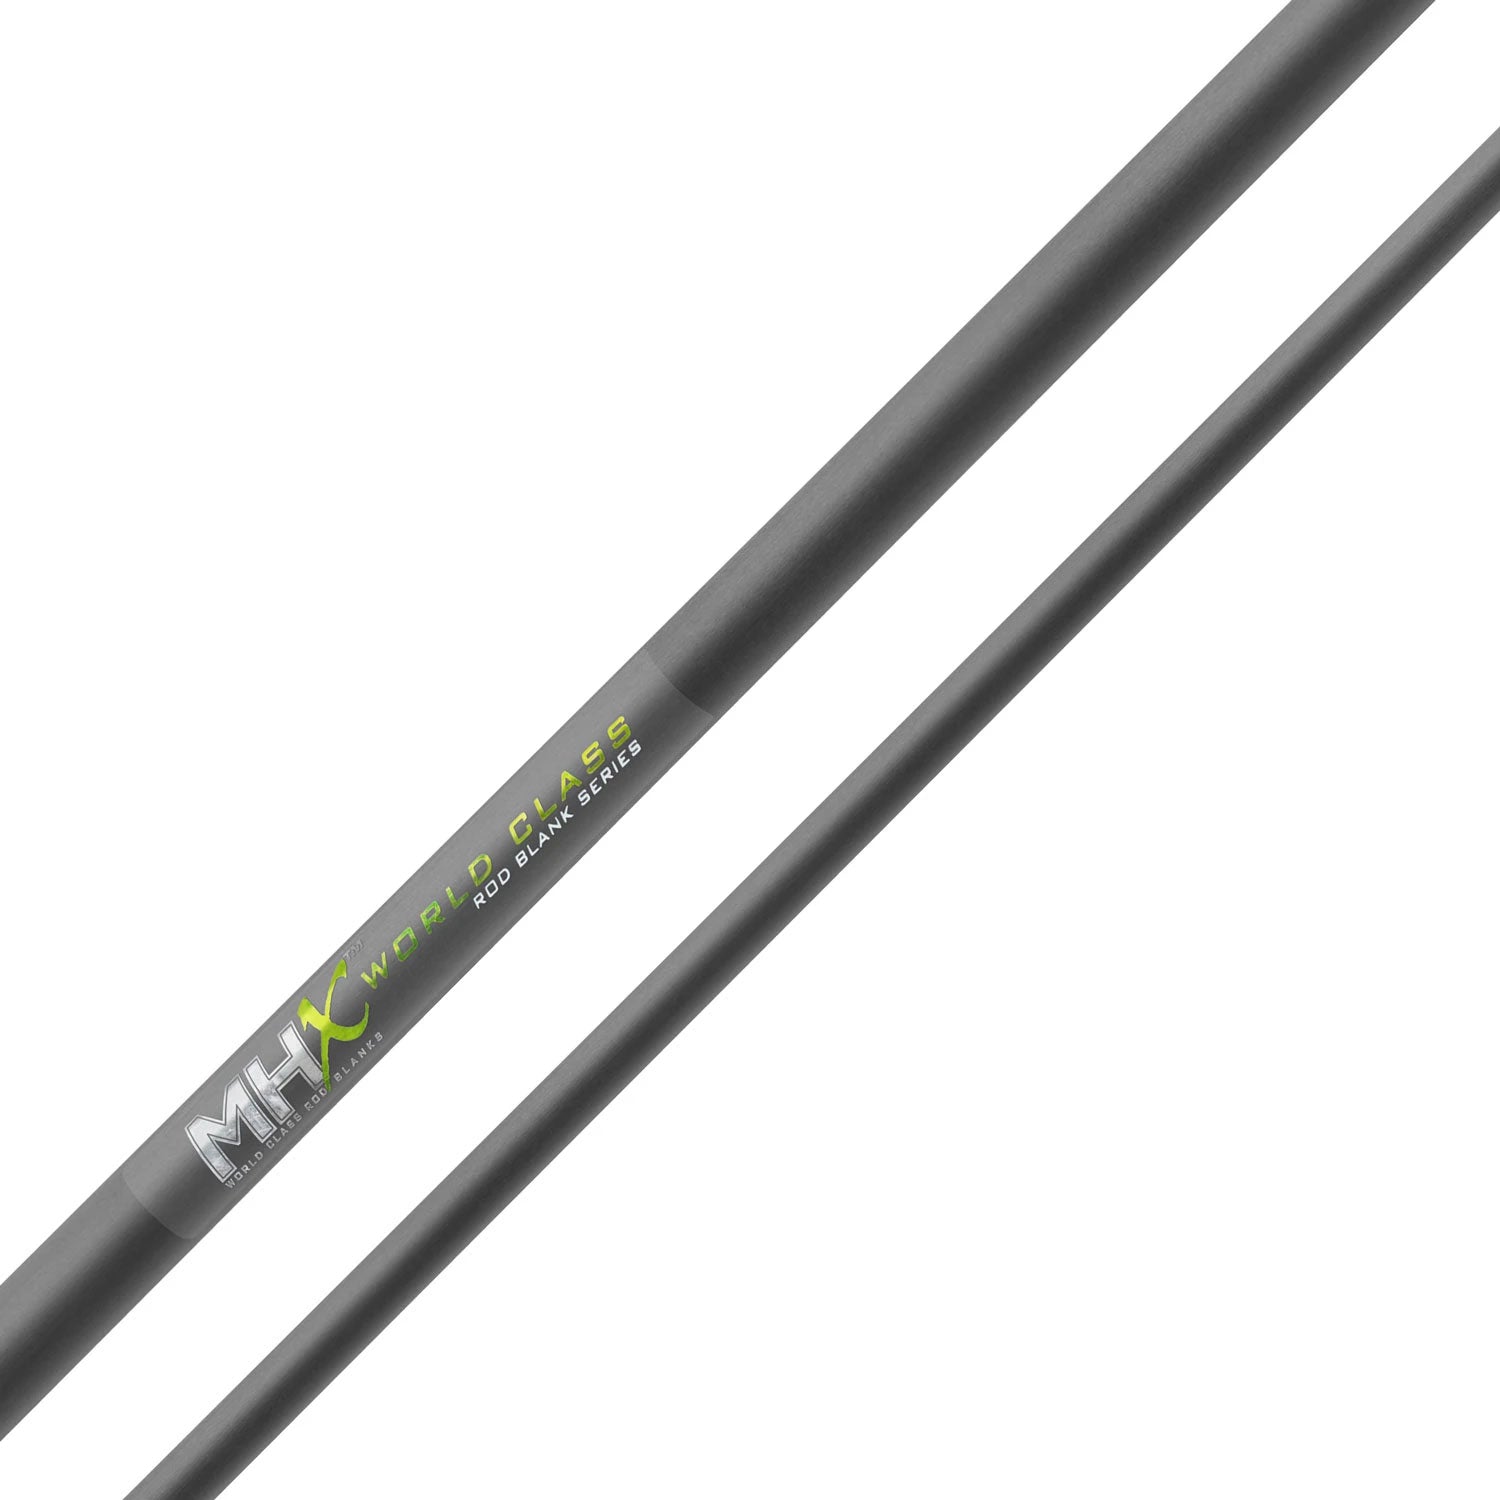 MHX 9'6" Med-Light Steelhead Rod Blank - ST1142-MHX